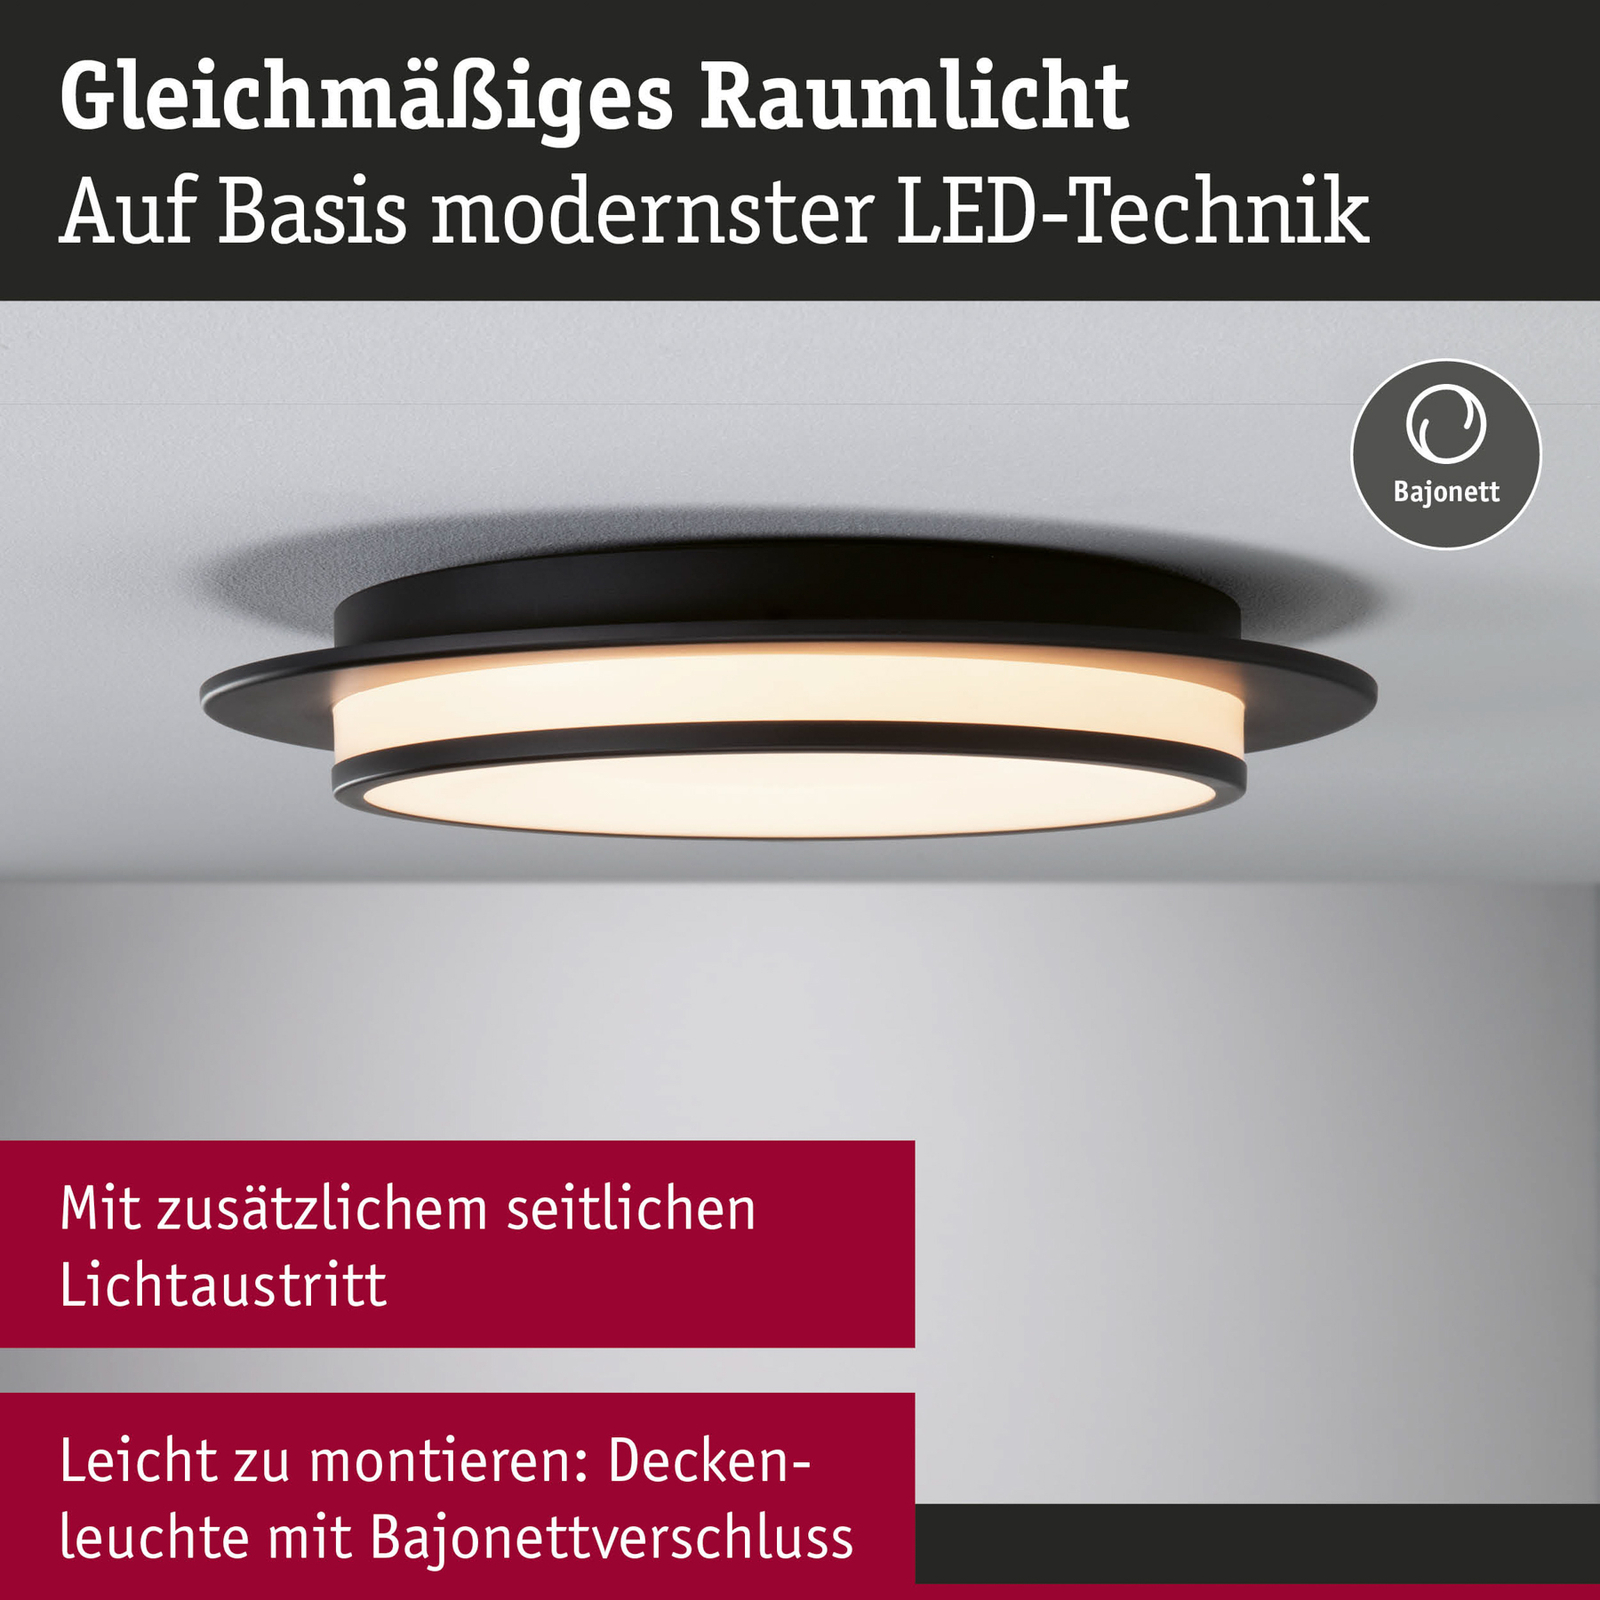 Paulmann Egron LED svetlo 3-step-dim, čierna